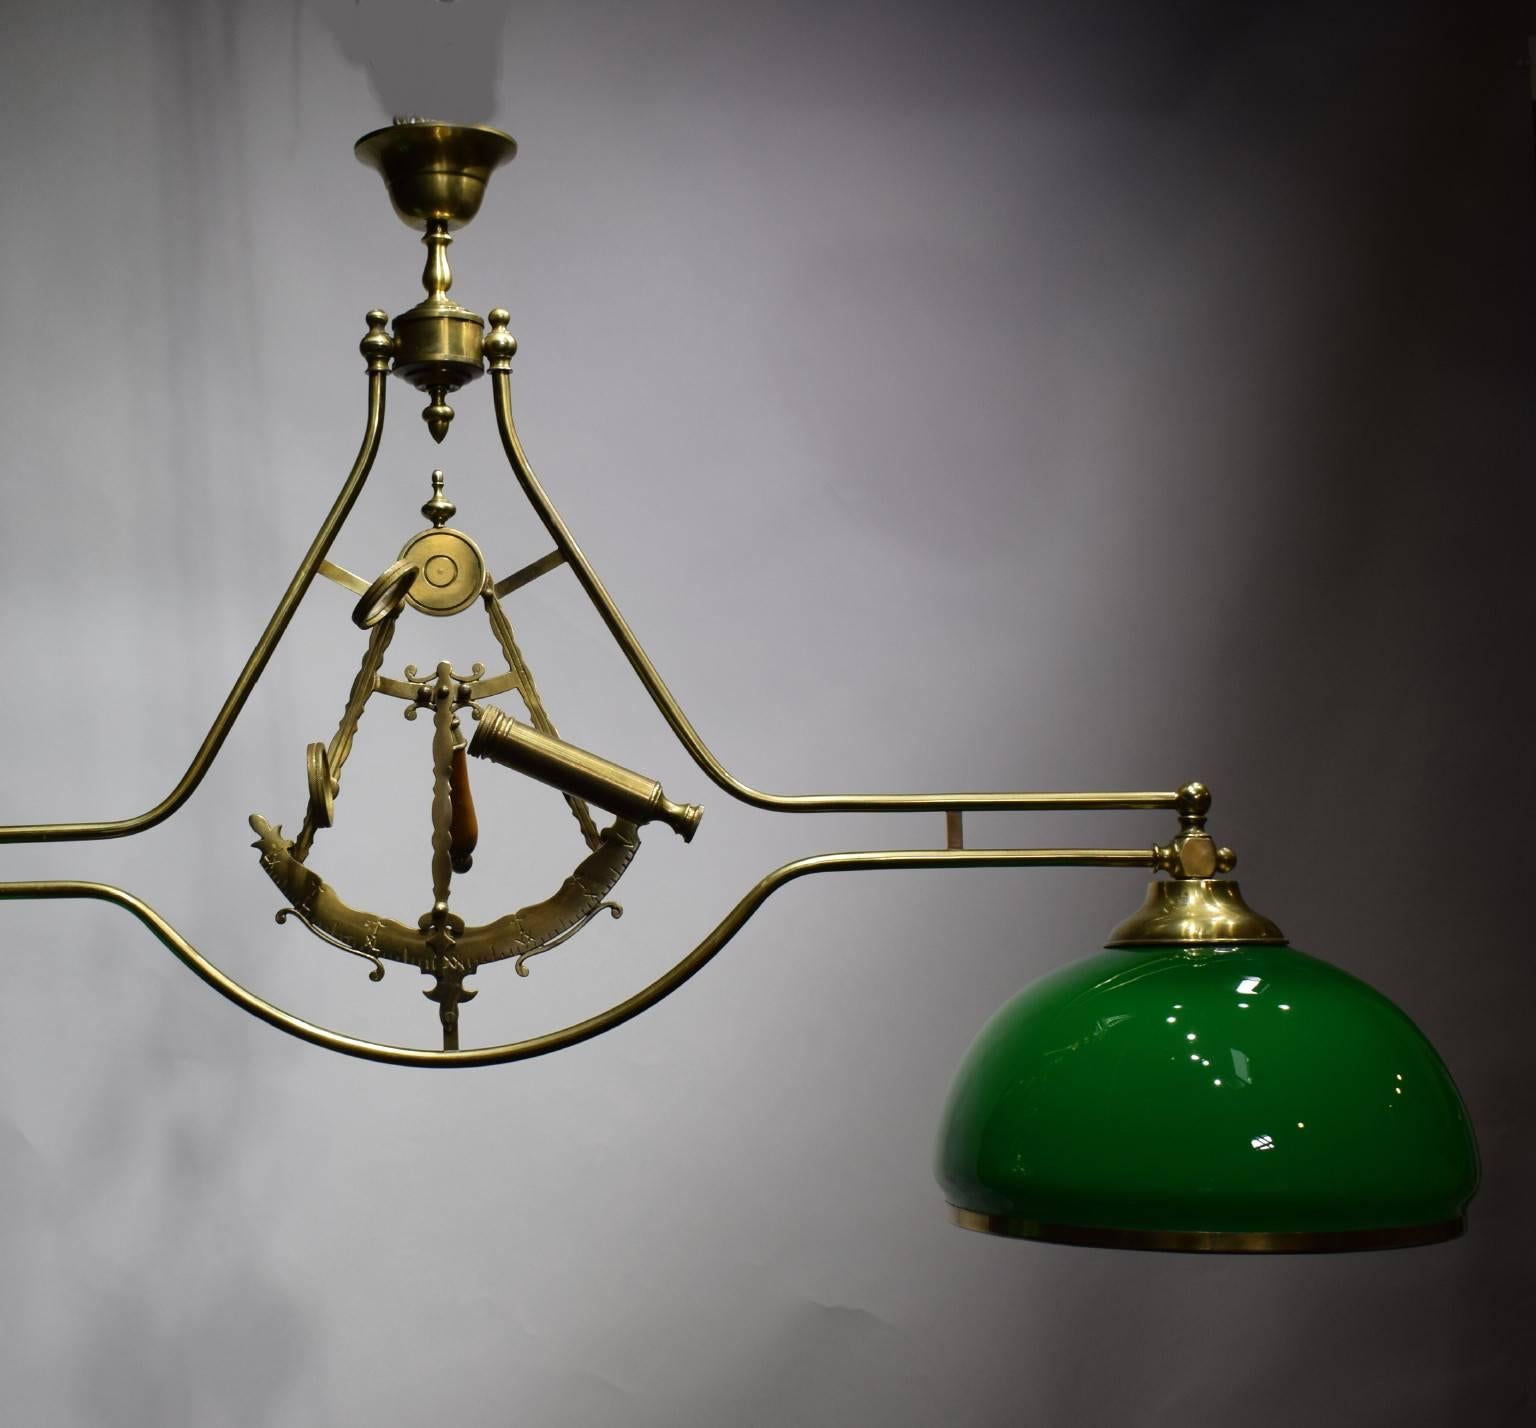 Fine two-light billiard chandelier featuring surveyor's tools.